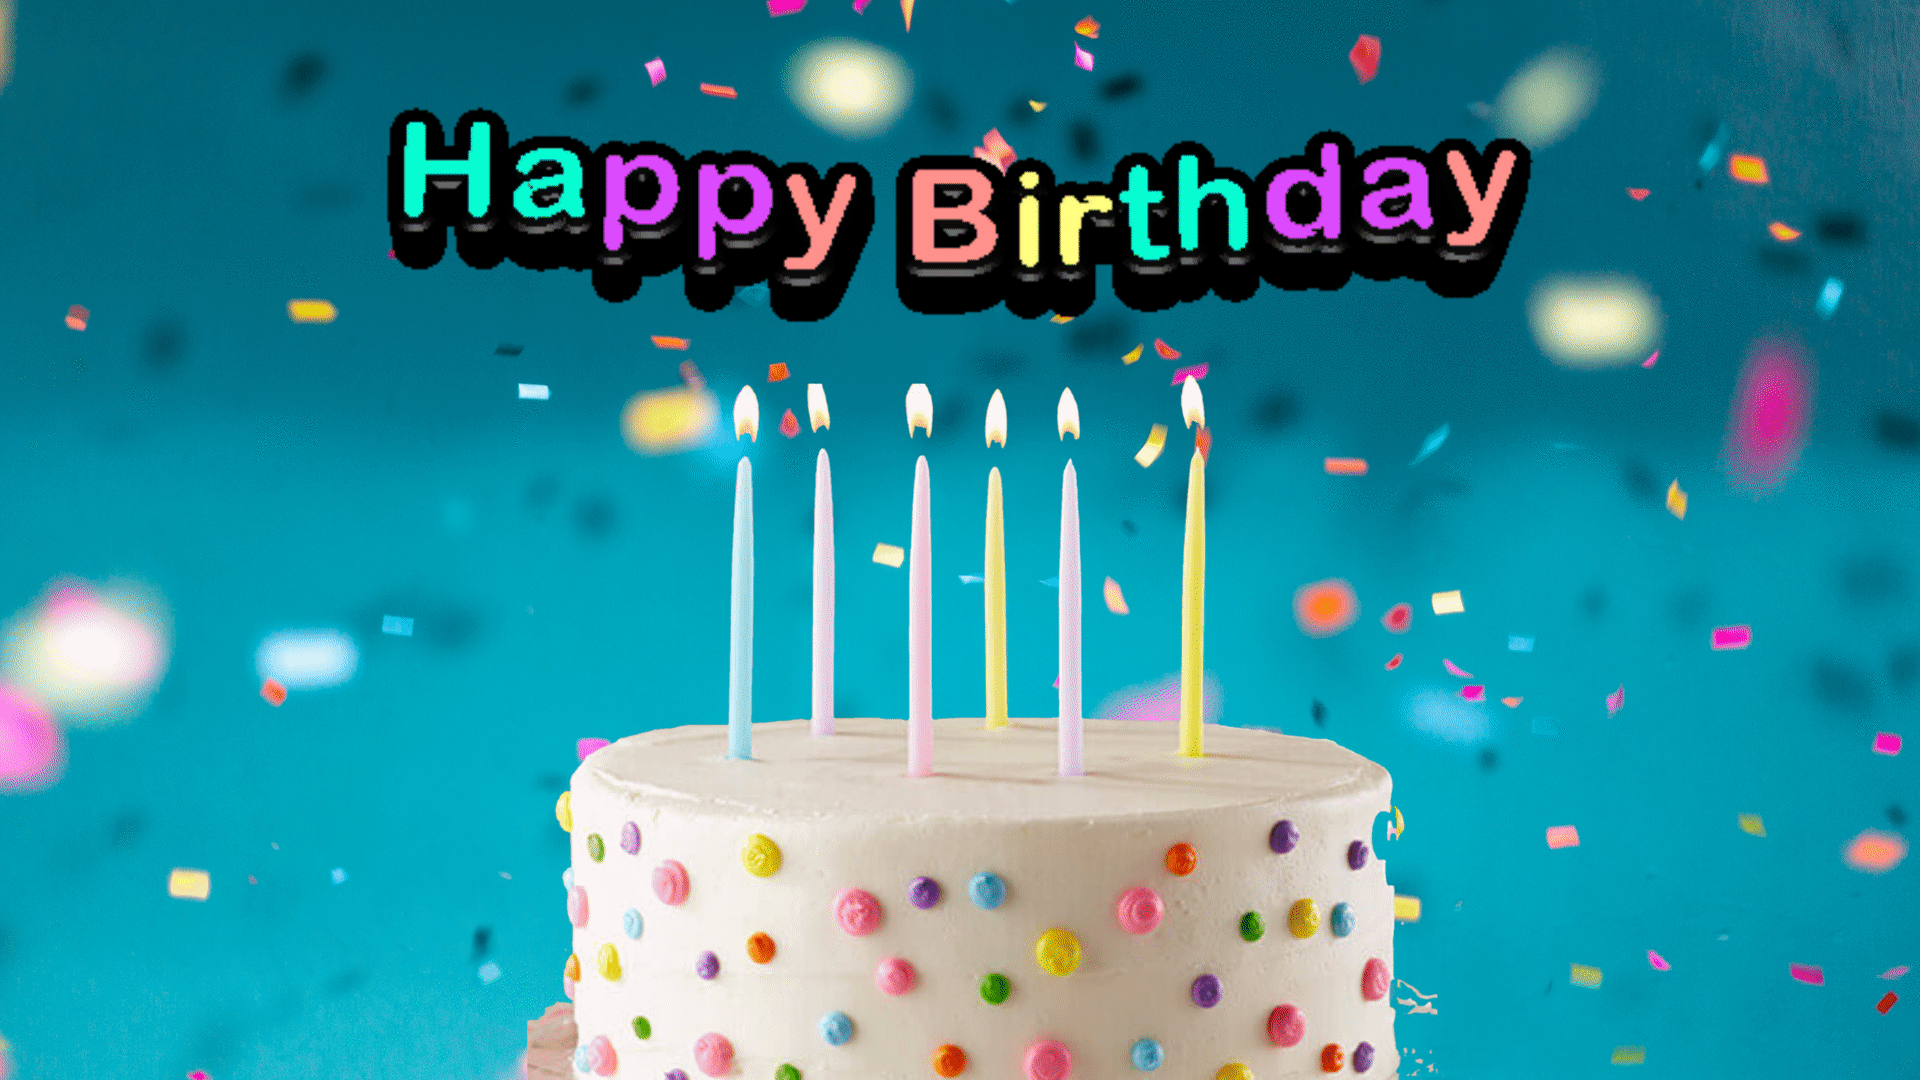 10 Free Animated Happy Birthday Images